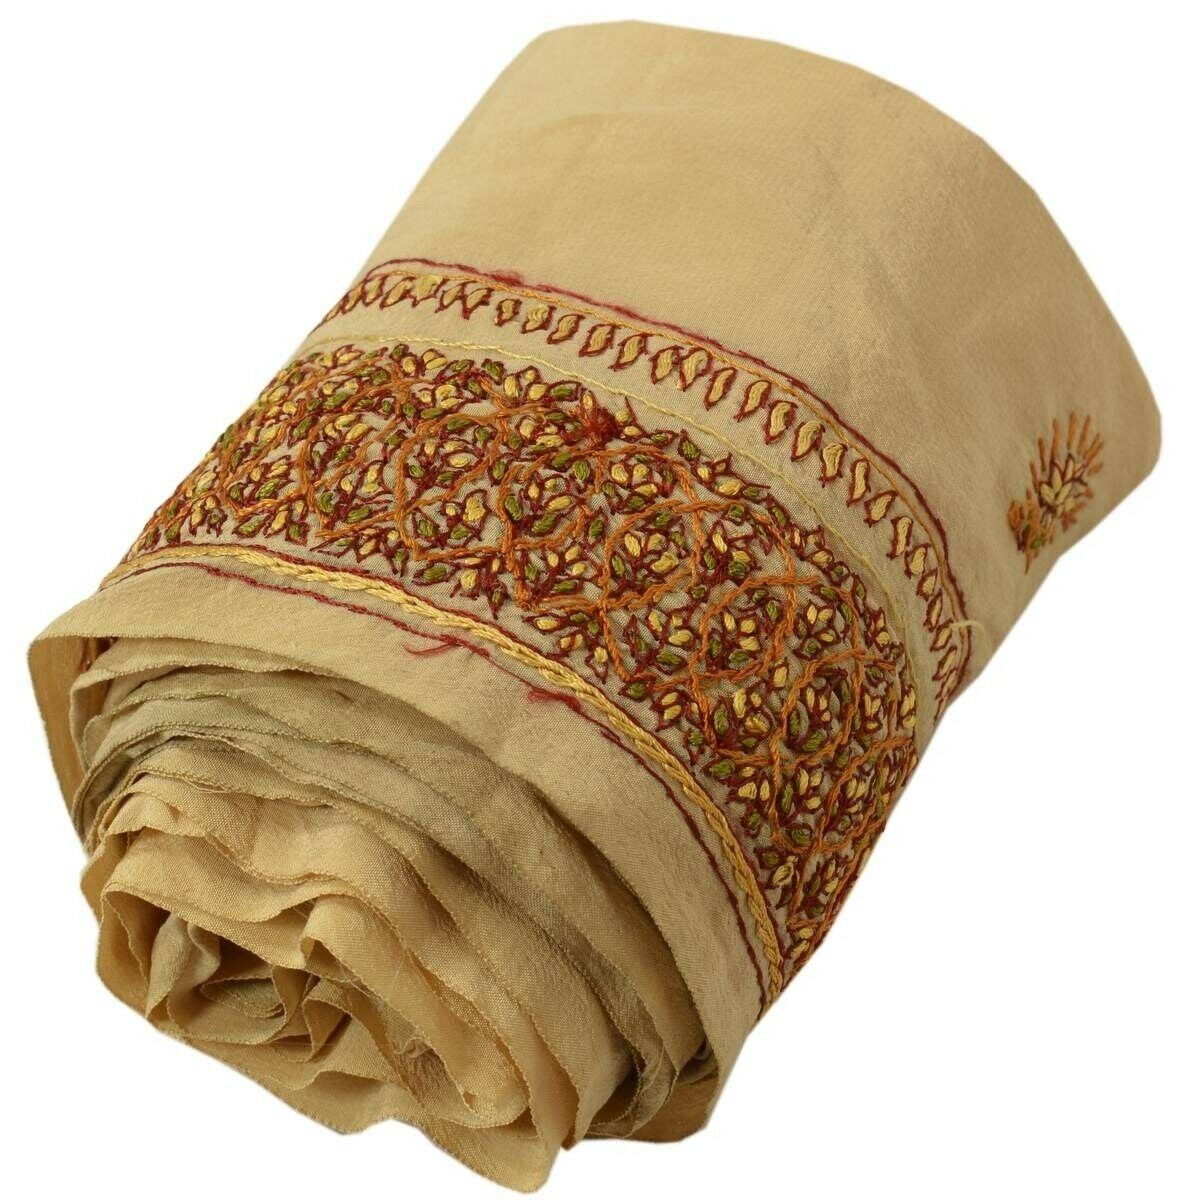 Antique Vintage Sari Border Indian Craft Trim Hand Embroidered Beige Lace Ribbon